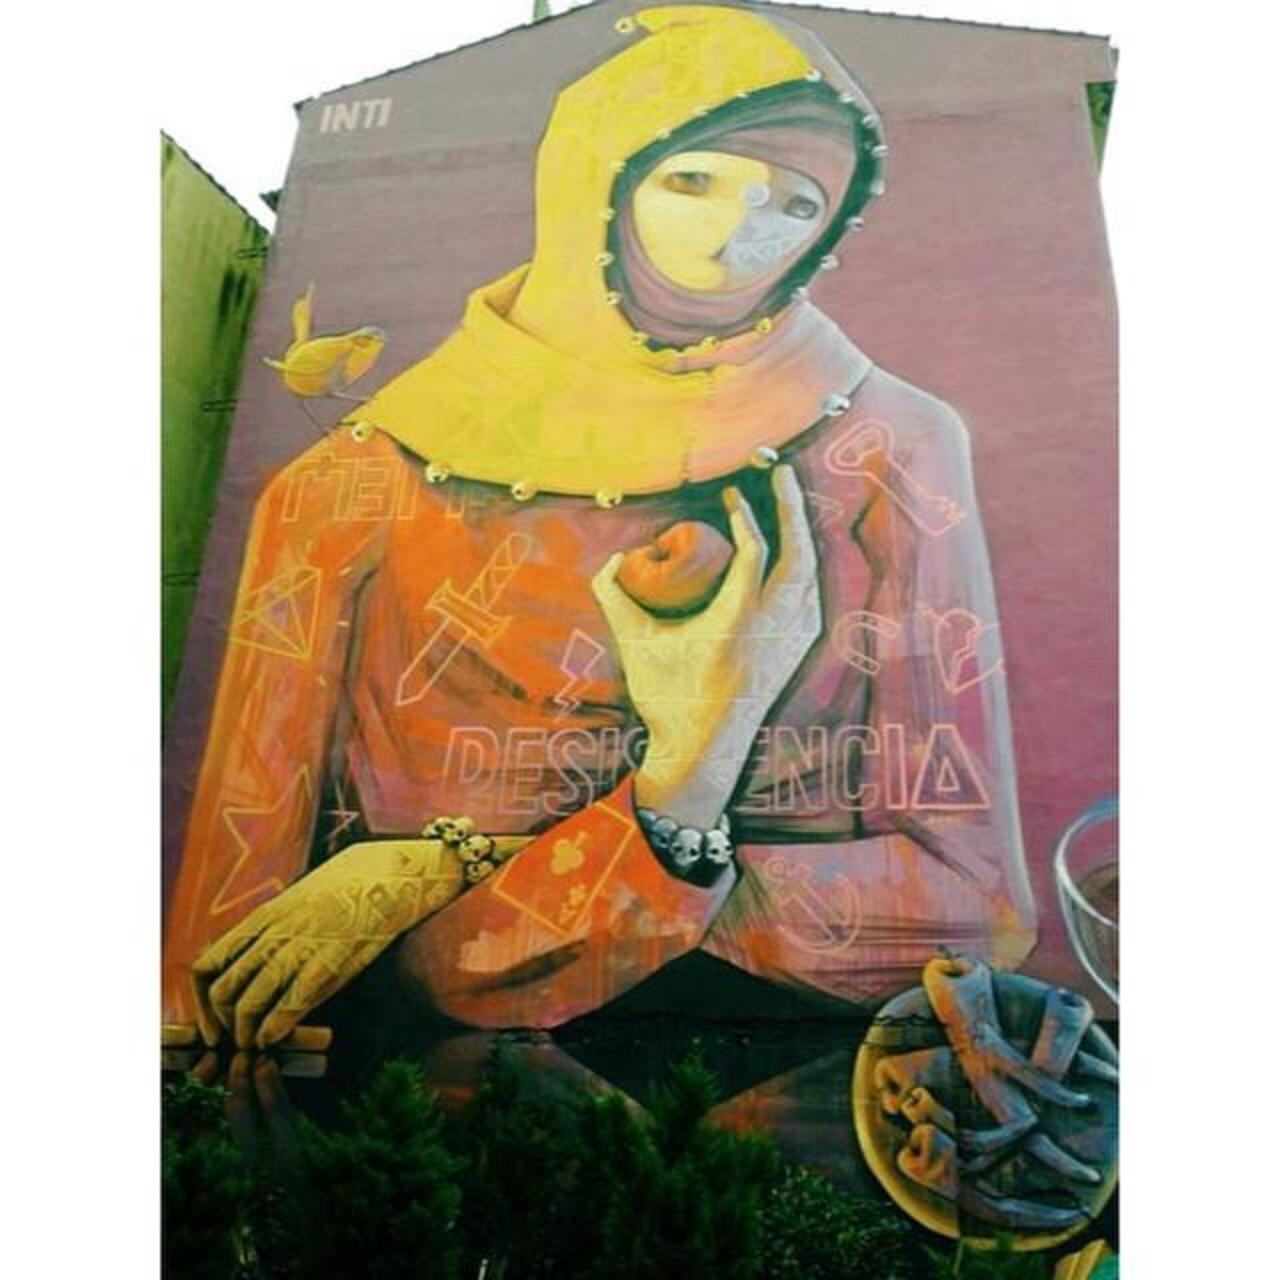 ✌️ #INTI #vsco #vscocam #vscophile #streetart #streetartistanbul #istanbulstreetart #mural #muralistanbul #graffiti… http://t.co/TQbyGQhVfK